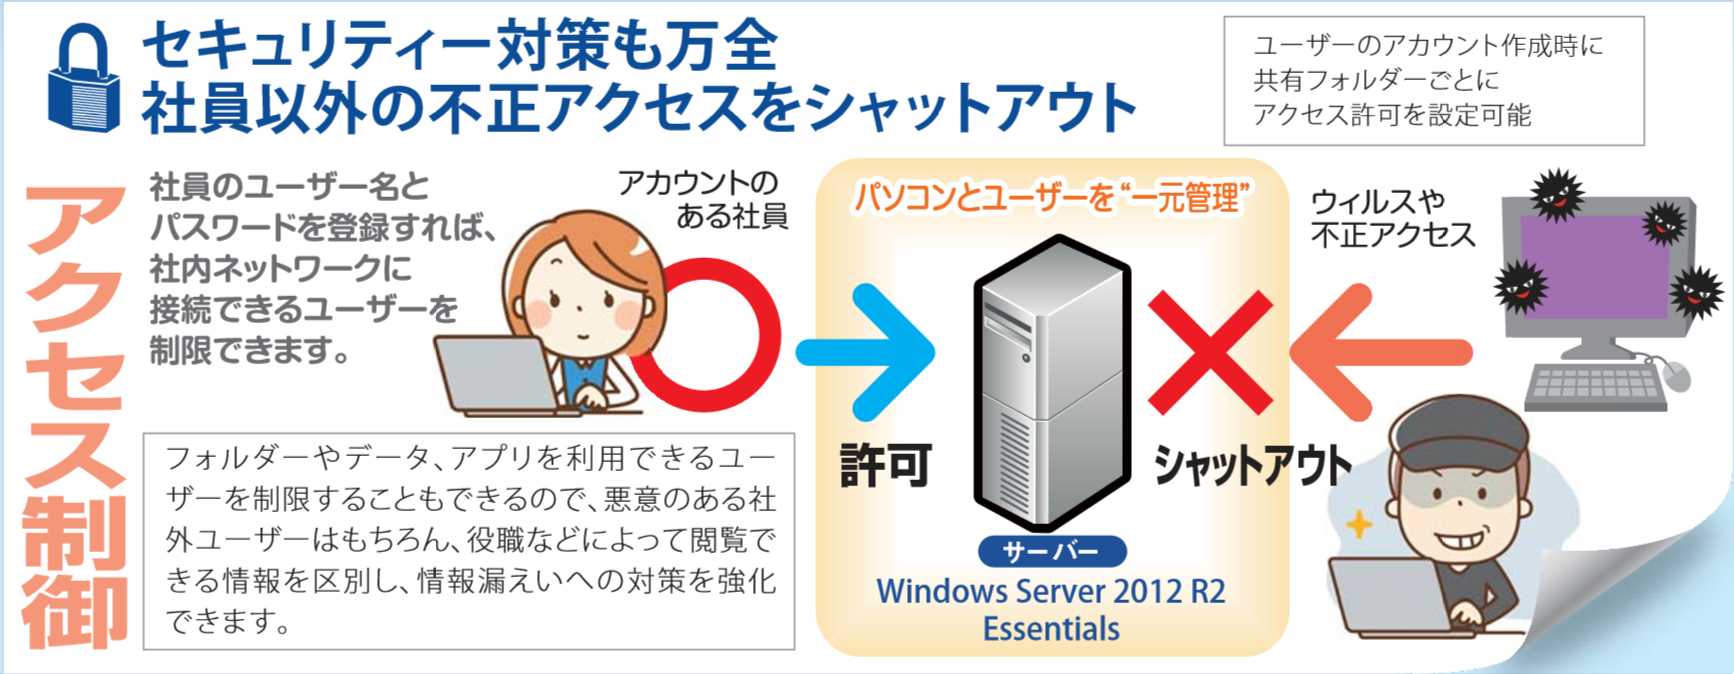 Windows Server 2012 R2 Essentials